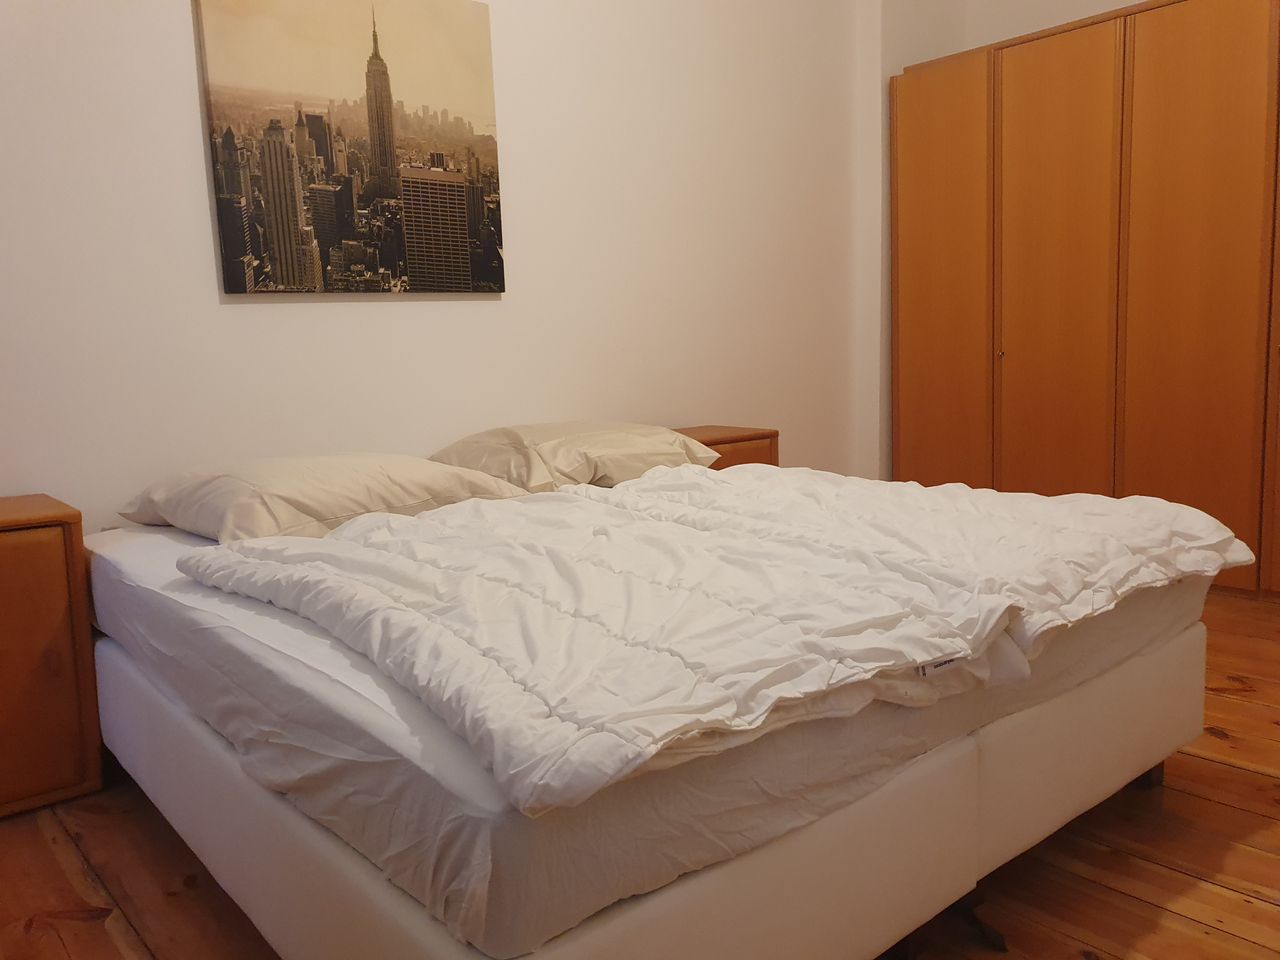 Extensively redecorated flat in quiet residential area of Berlin-Oberschöneweide